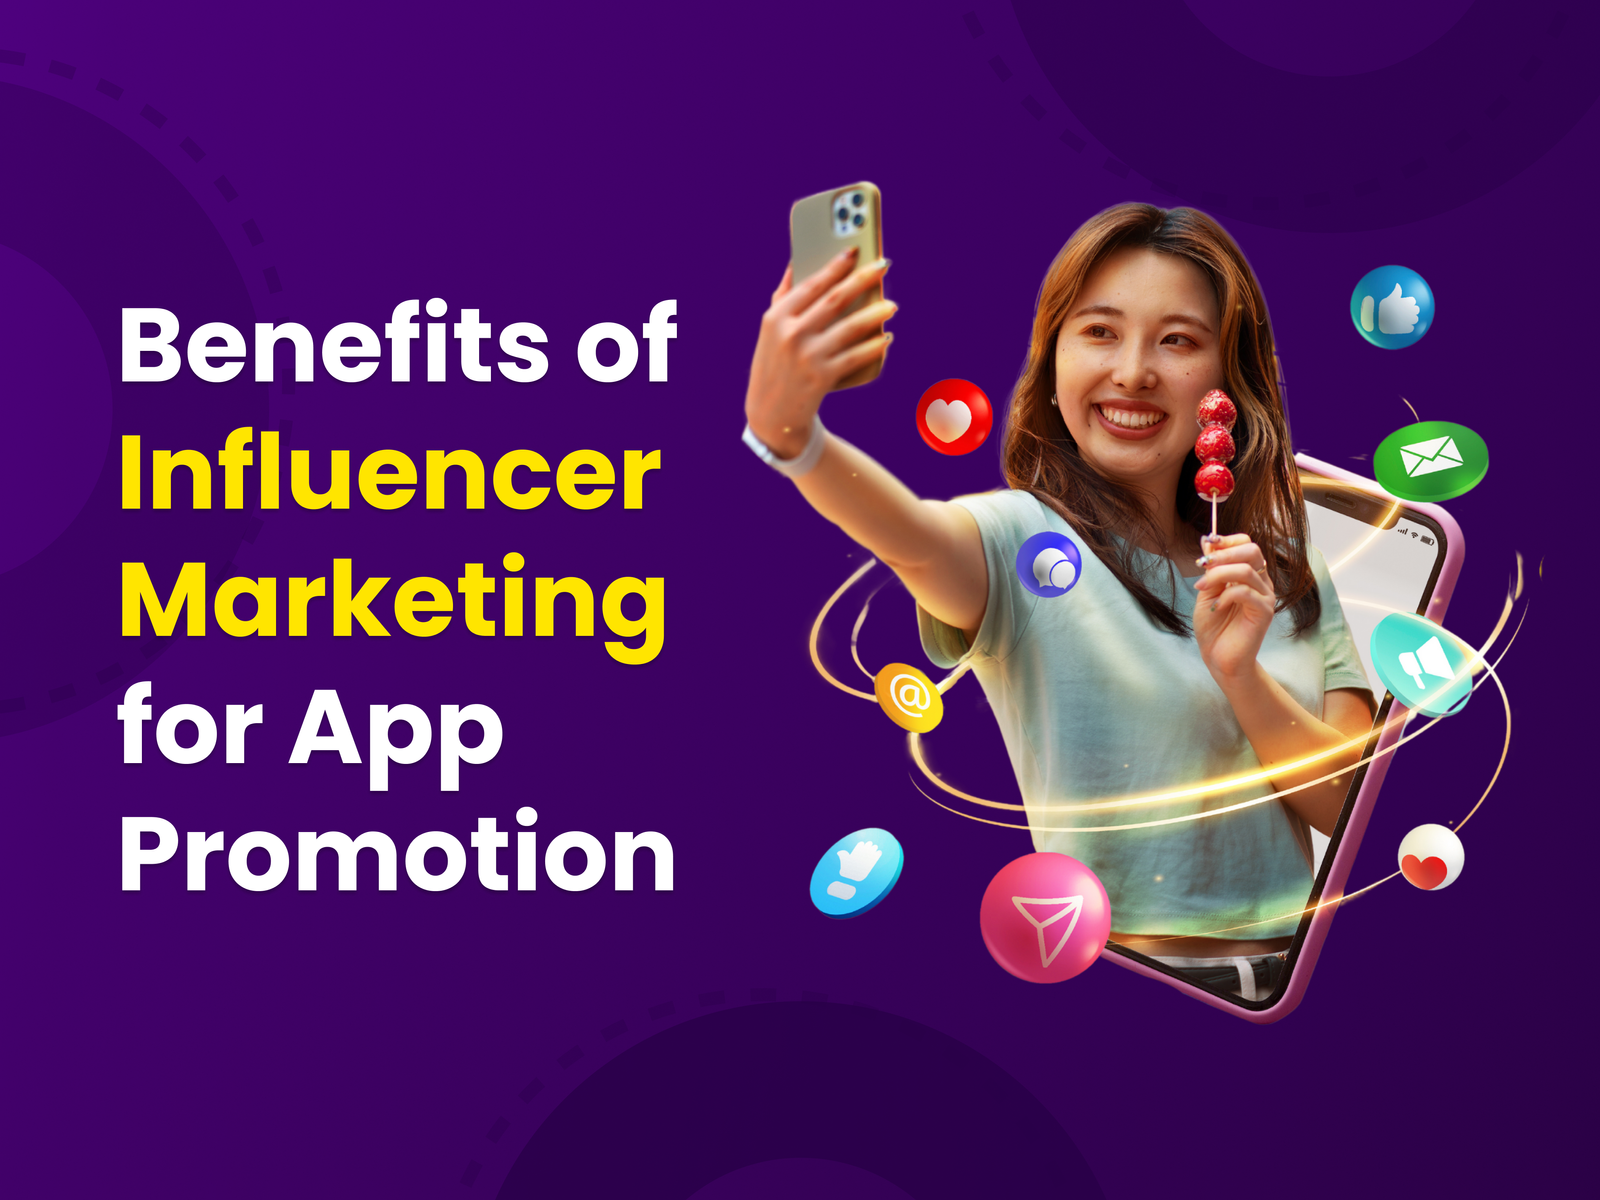 Benefits of Influencer Marketing for App Promotion